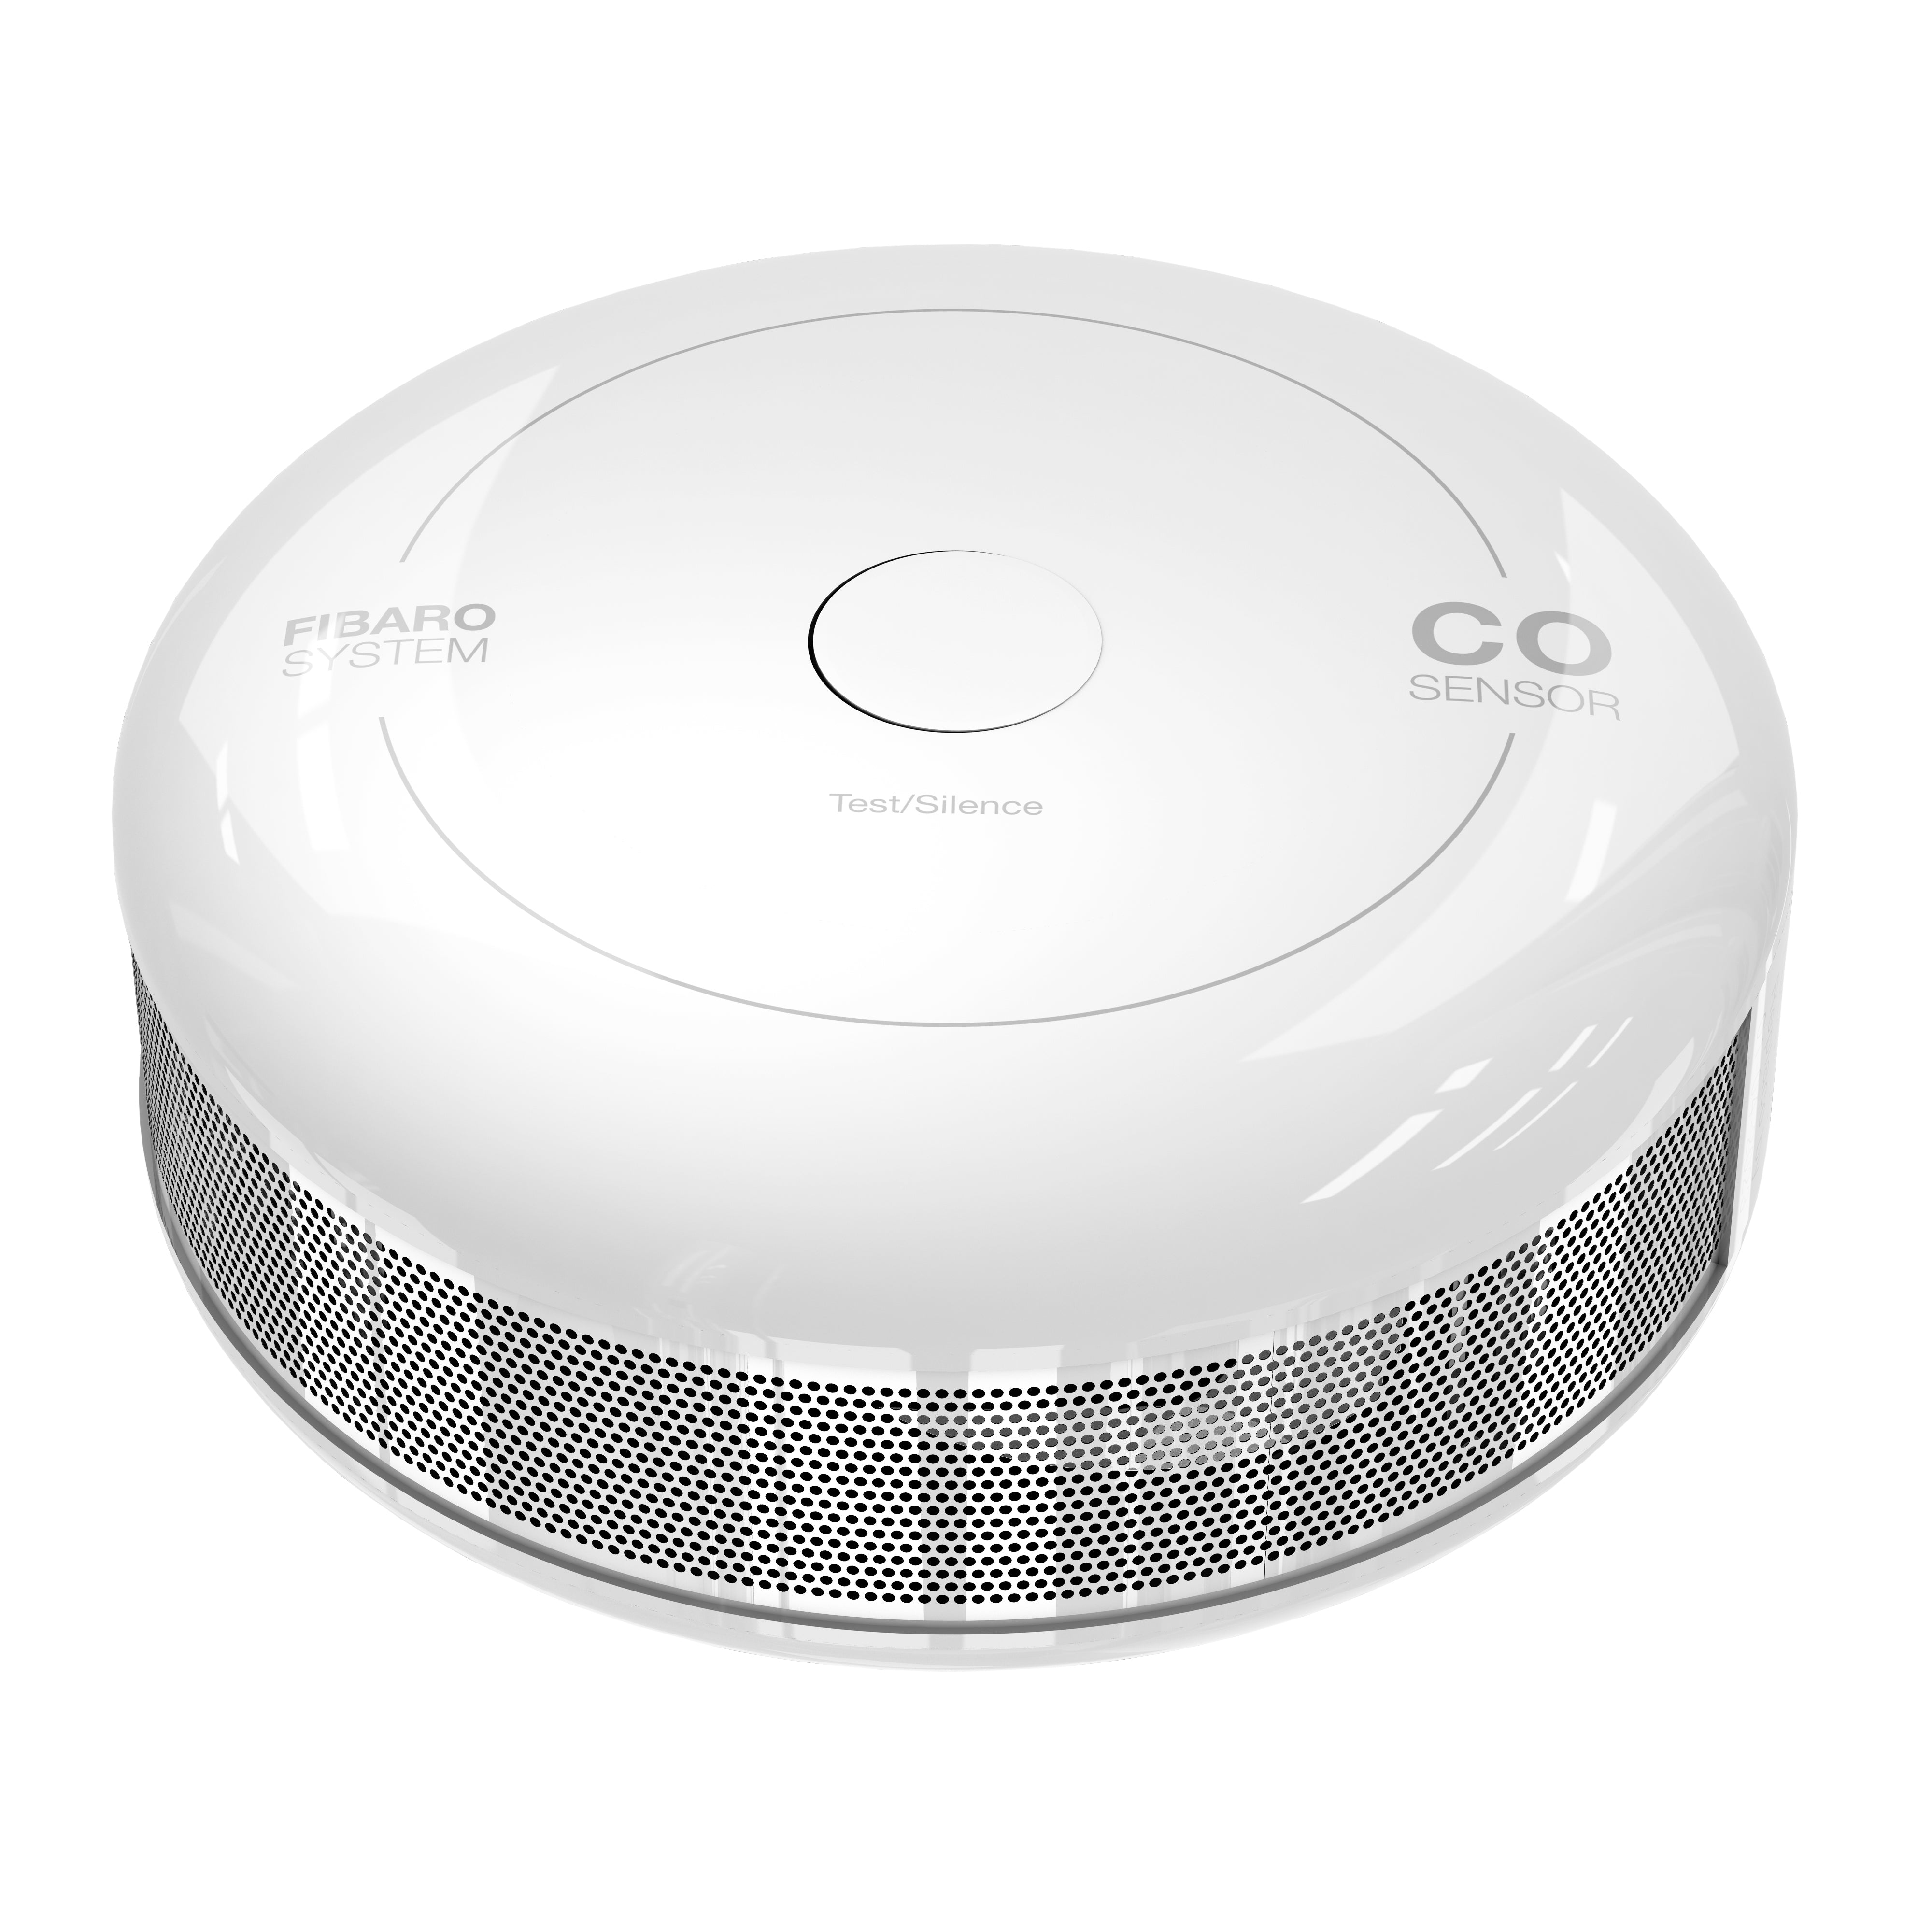 FIBARO Smart Home CO sensor, top view